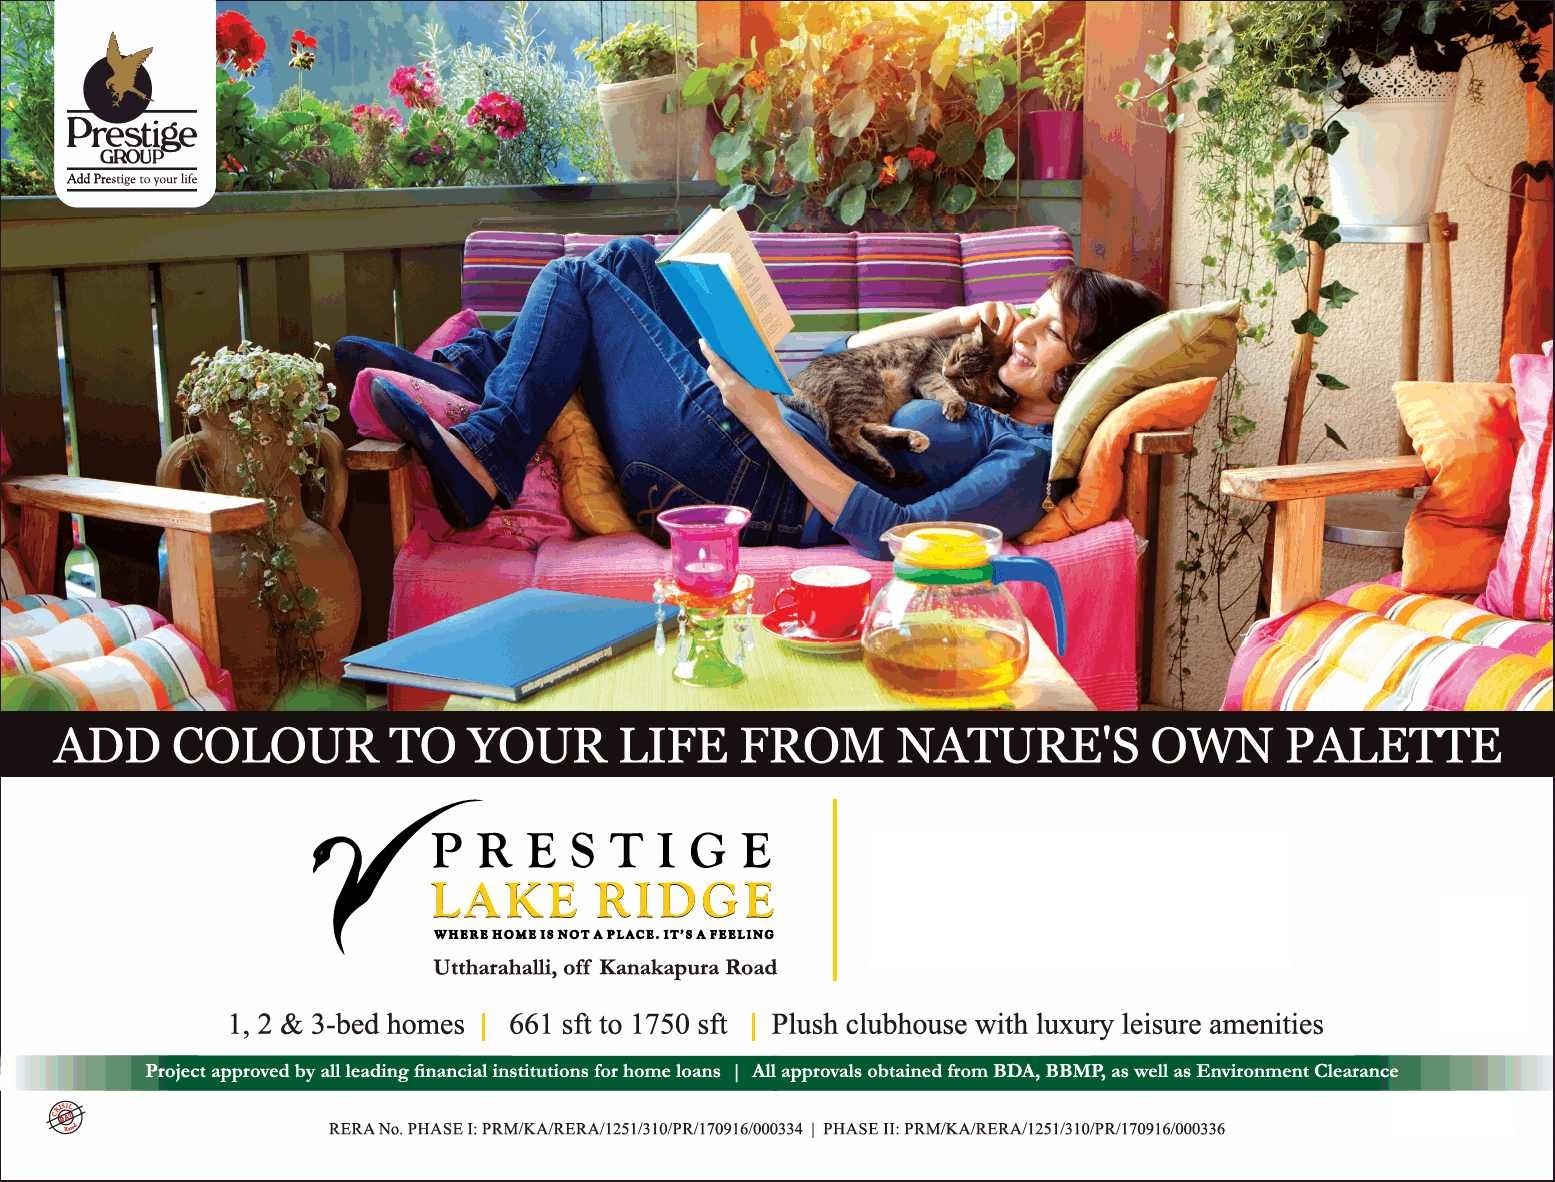 Prestige Lake Ridge launching plush clubhouse with luxury leisure amenities in Bangalore Update